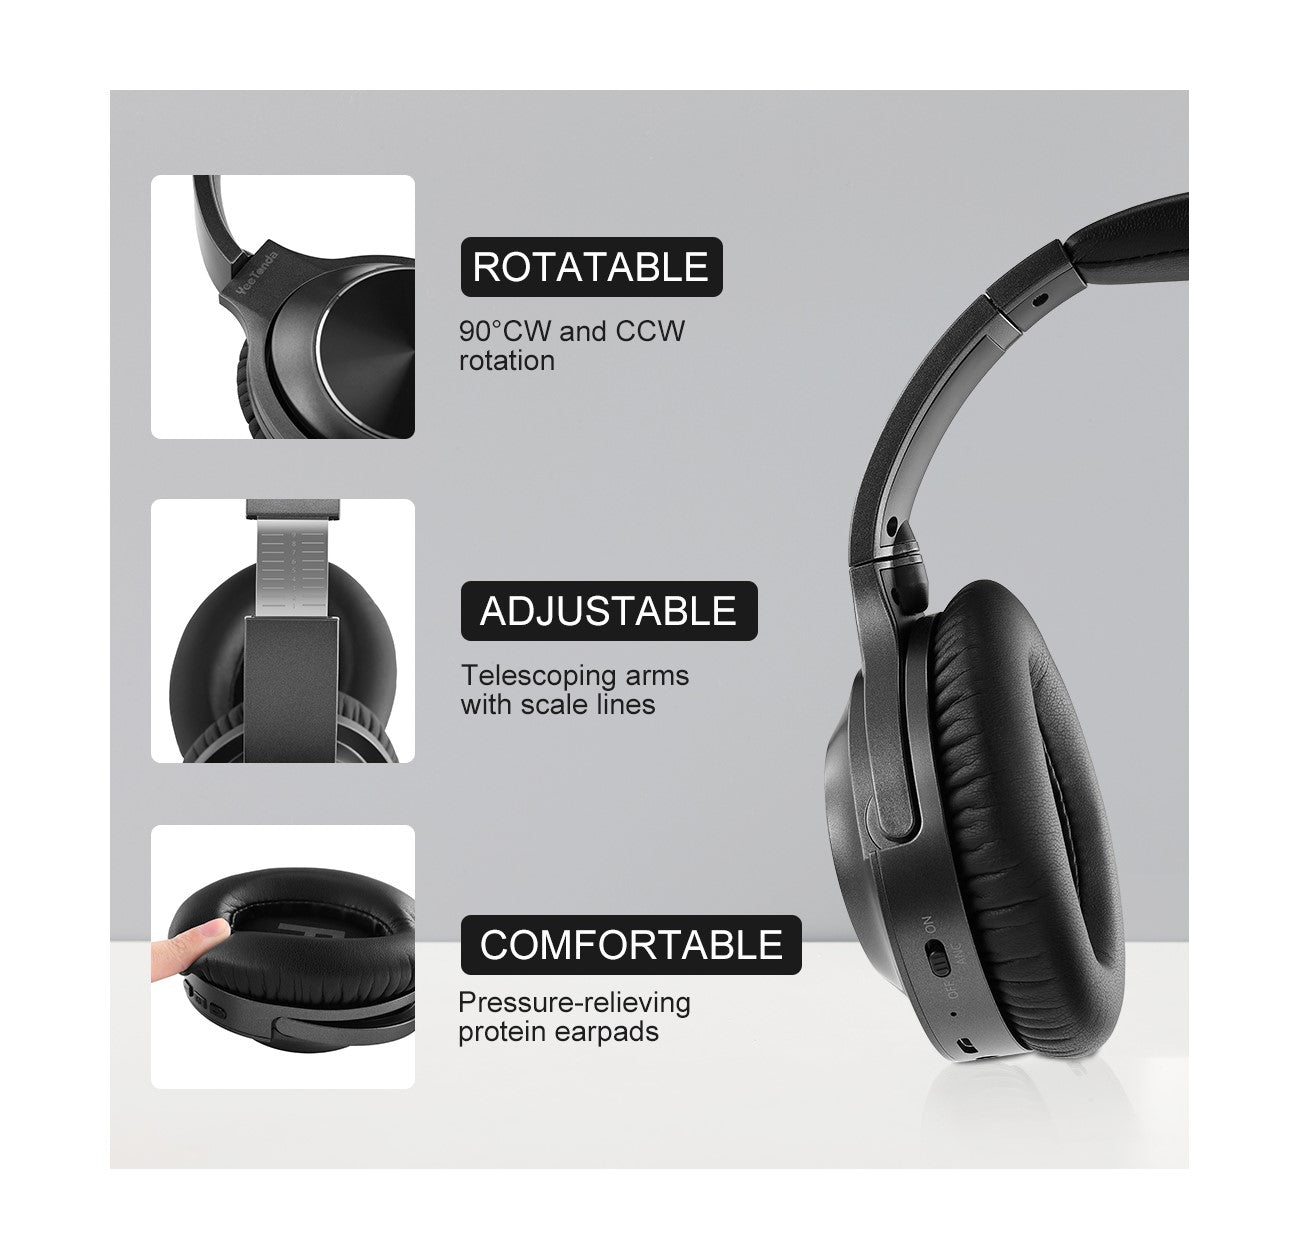 Yee Tonda Active Noise Cancelling Wireless Headphones (Y77)